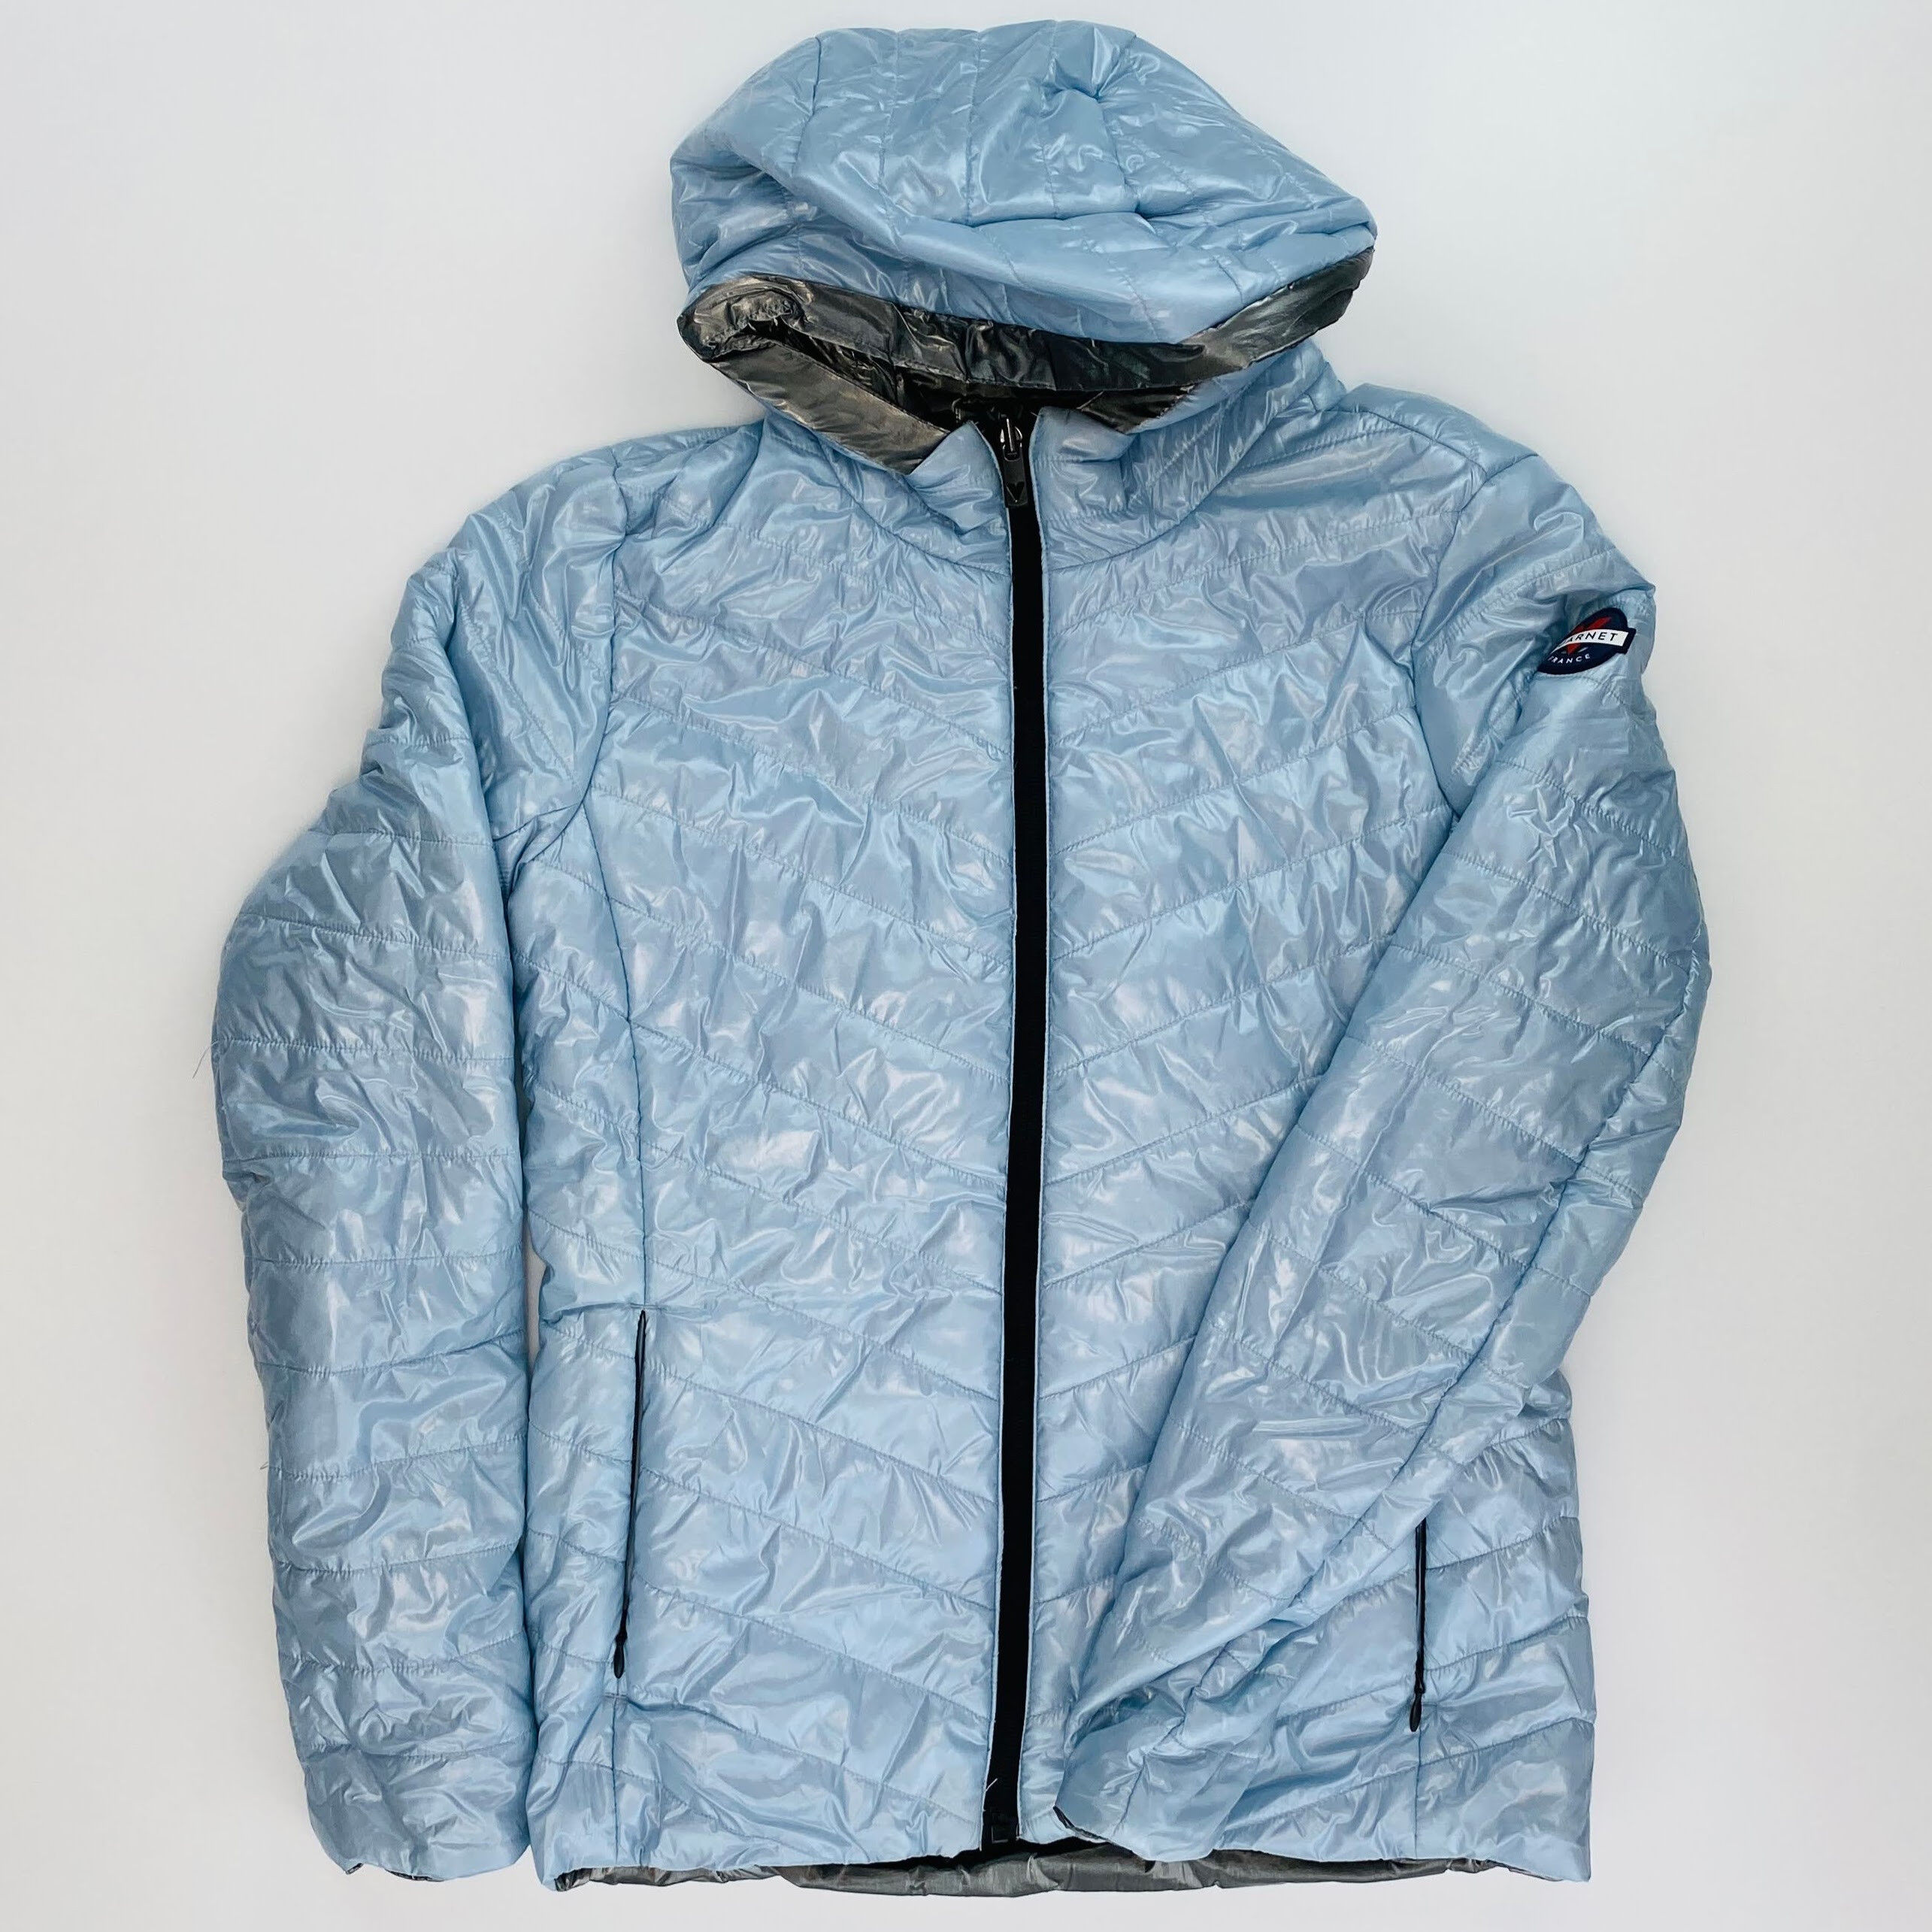 Vuarnet Victoria Jacket Reversible - Second Hand Synthetic jacket - Women's - Blue - S | Hardloop